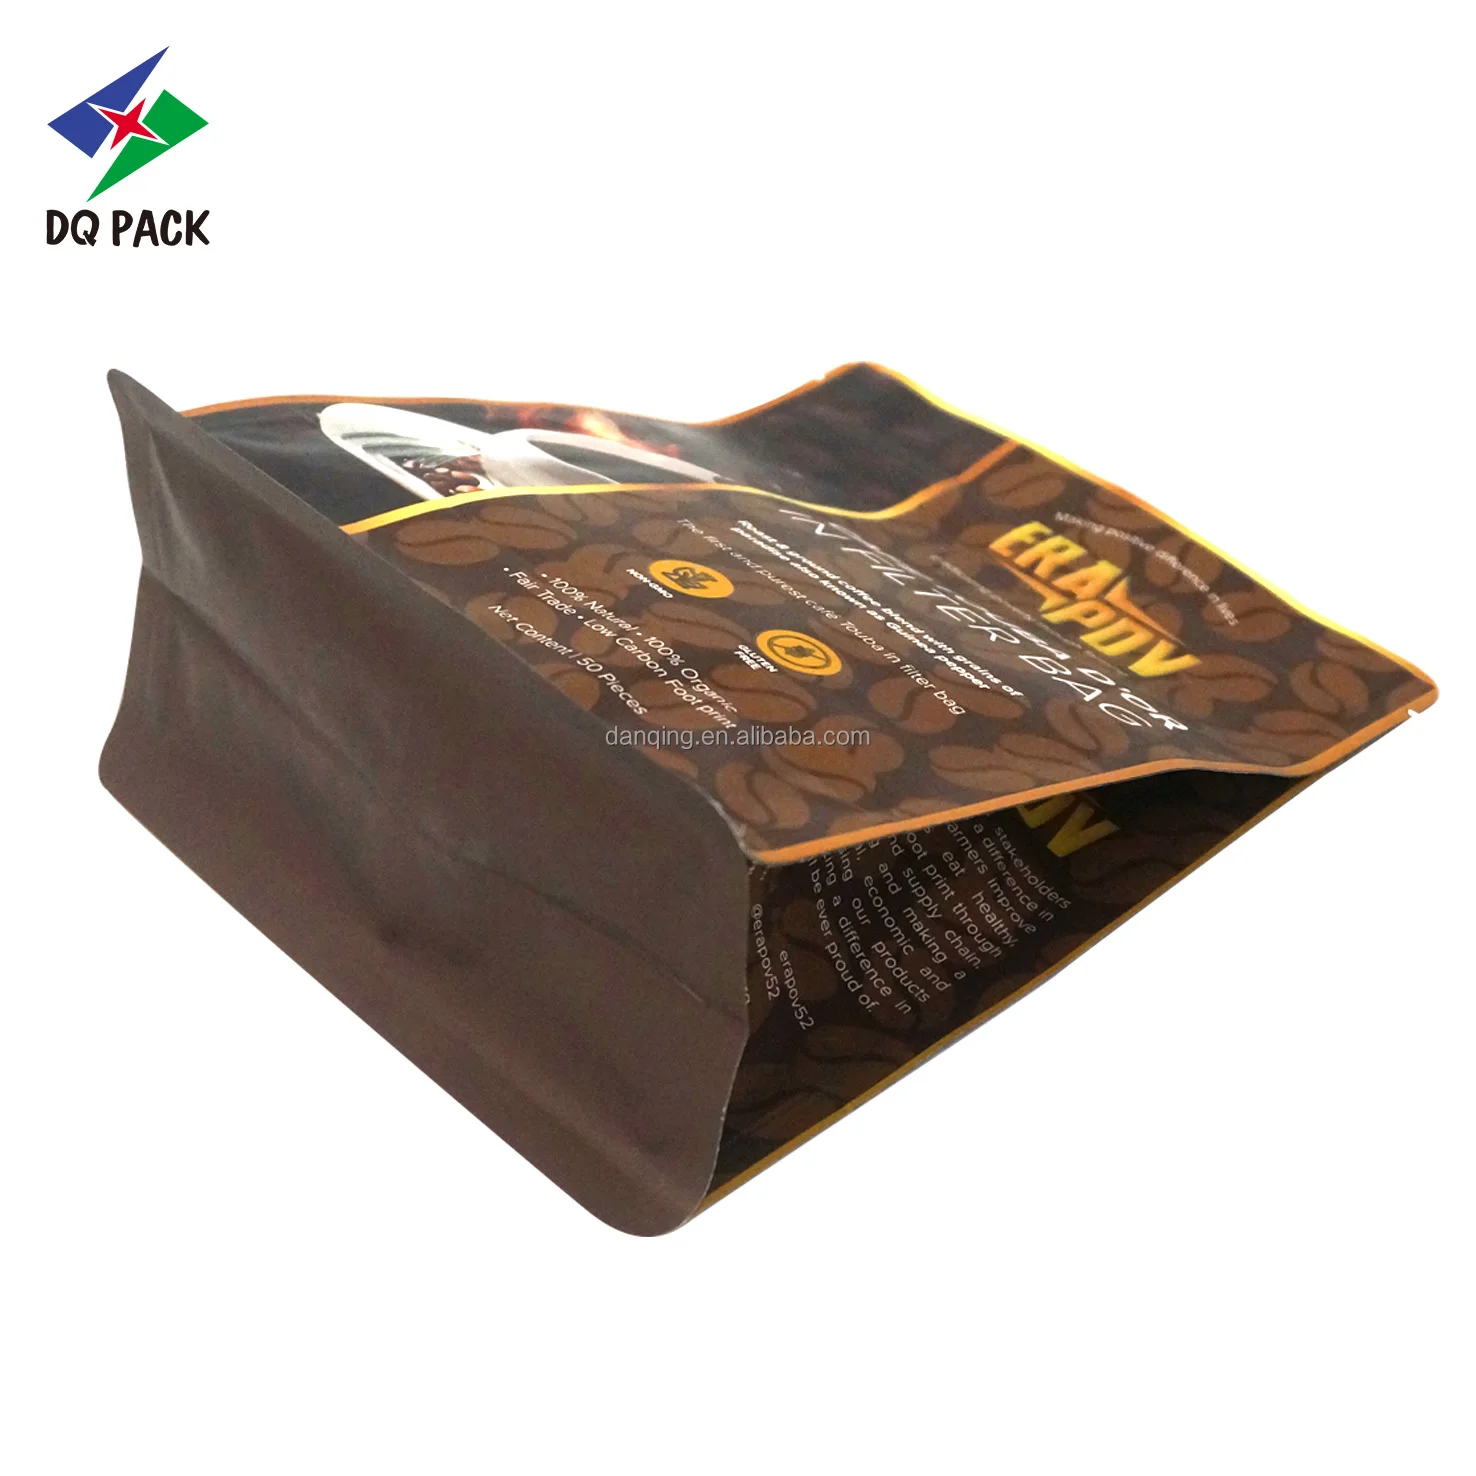 DQ PACK 500g/1kg Custom Printing Flat Bottom Coffee Bag With Zipper